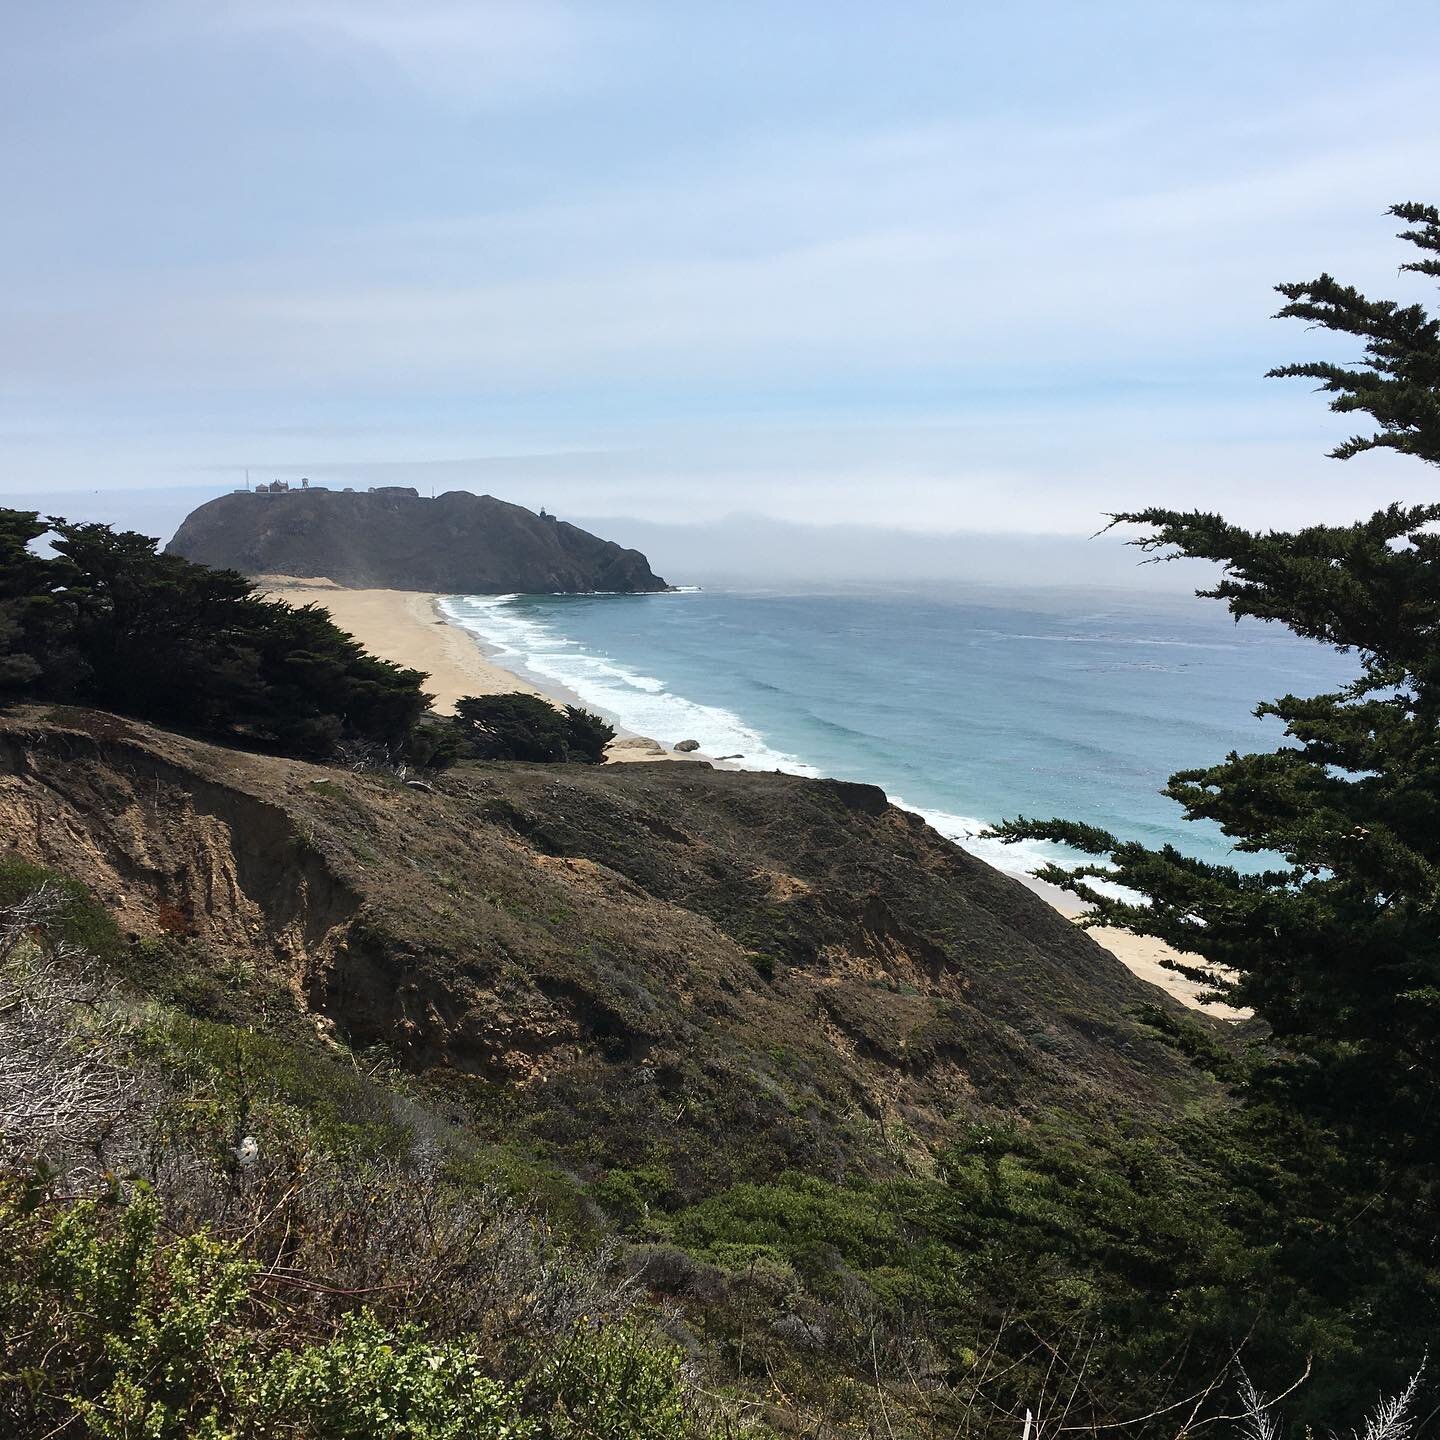 Road trip up the California coast. Found this gem for a beach break and picnic
.
.
#roadtrip #pacificcoasthighway #beachvibes #loveafoggyday #kelp #explore